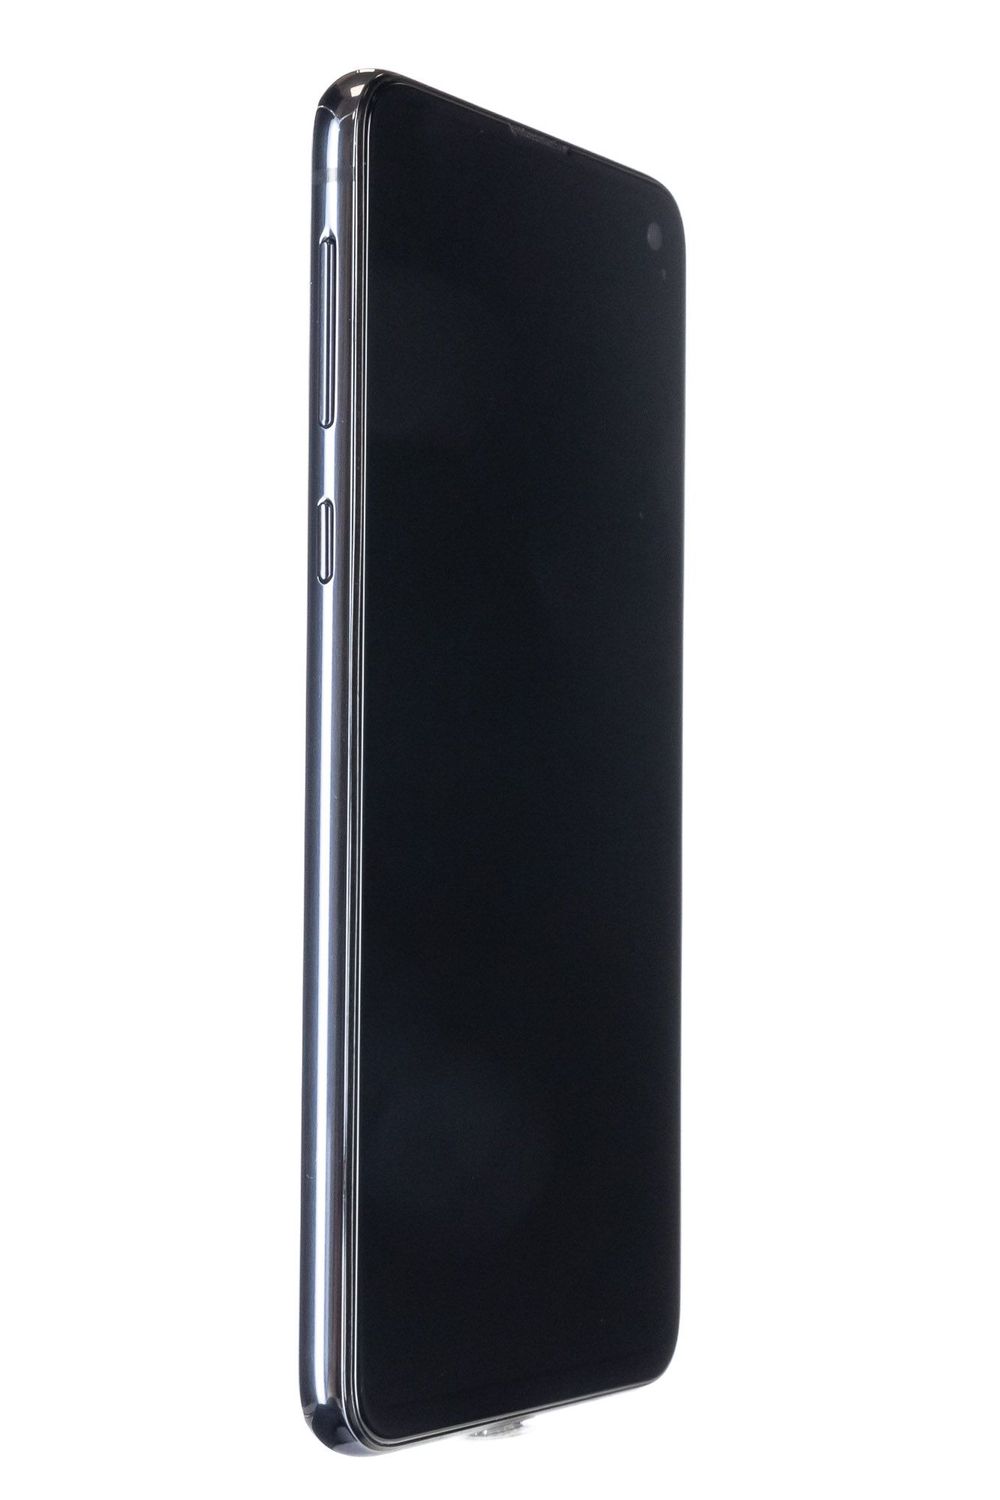 Mobiltelefon Samsung Galaxy S10 e Dual Sim, Prism Black, 128 GB, Foarte Bun